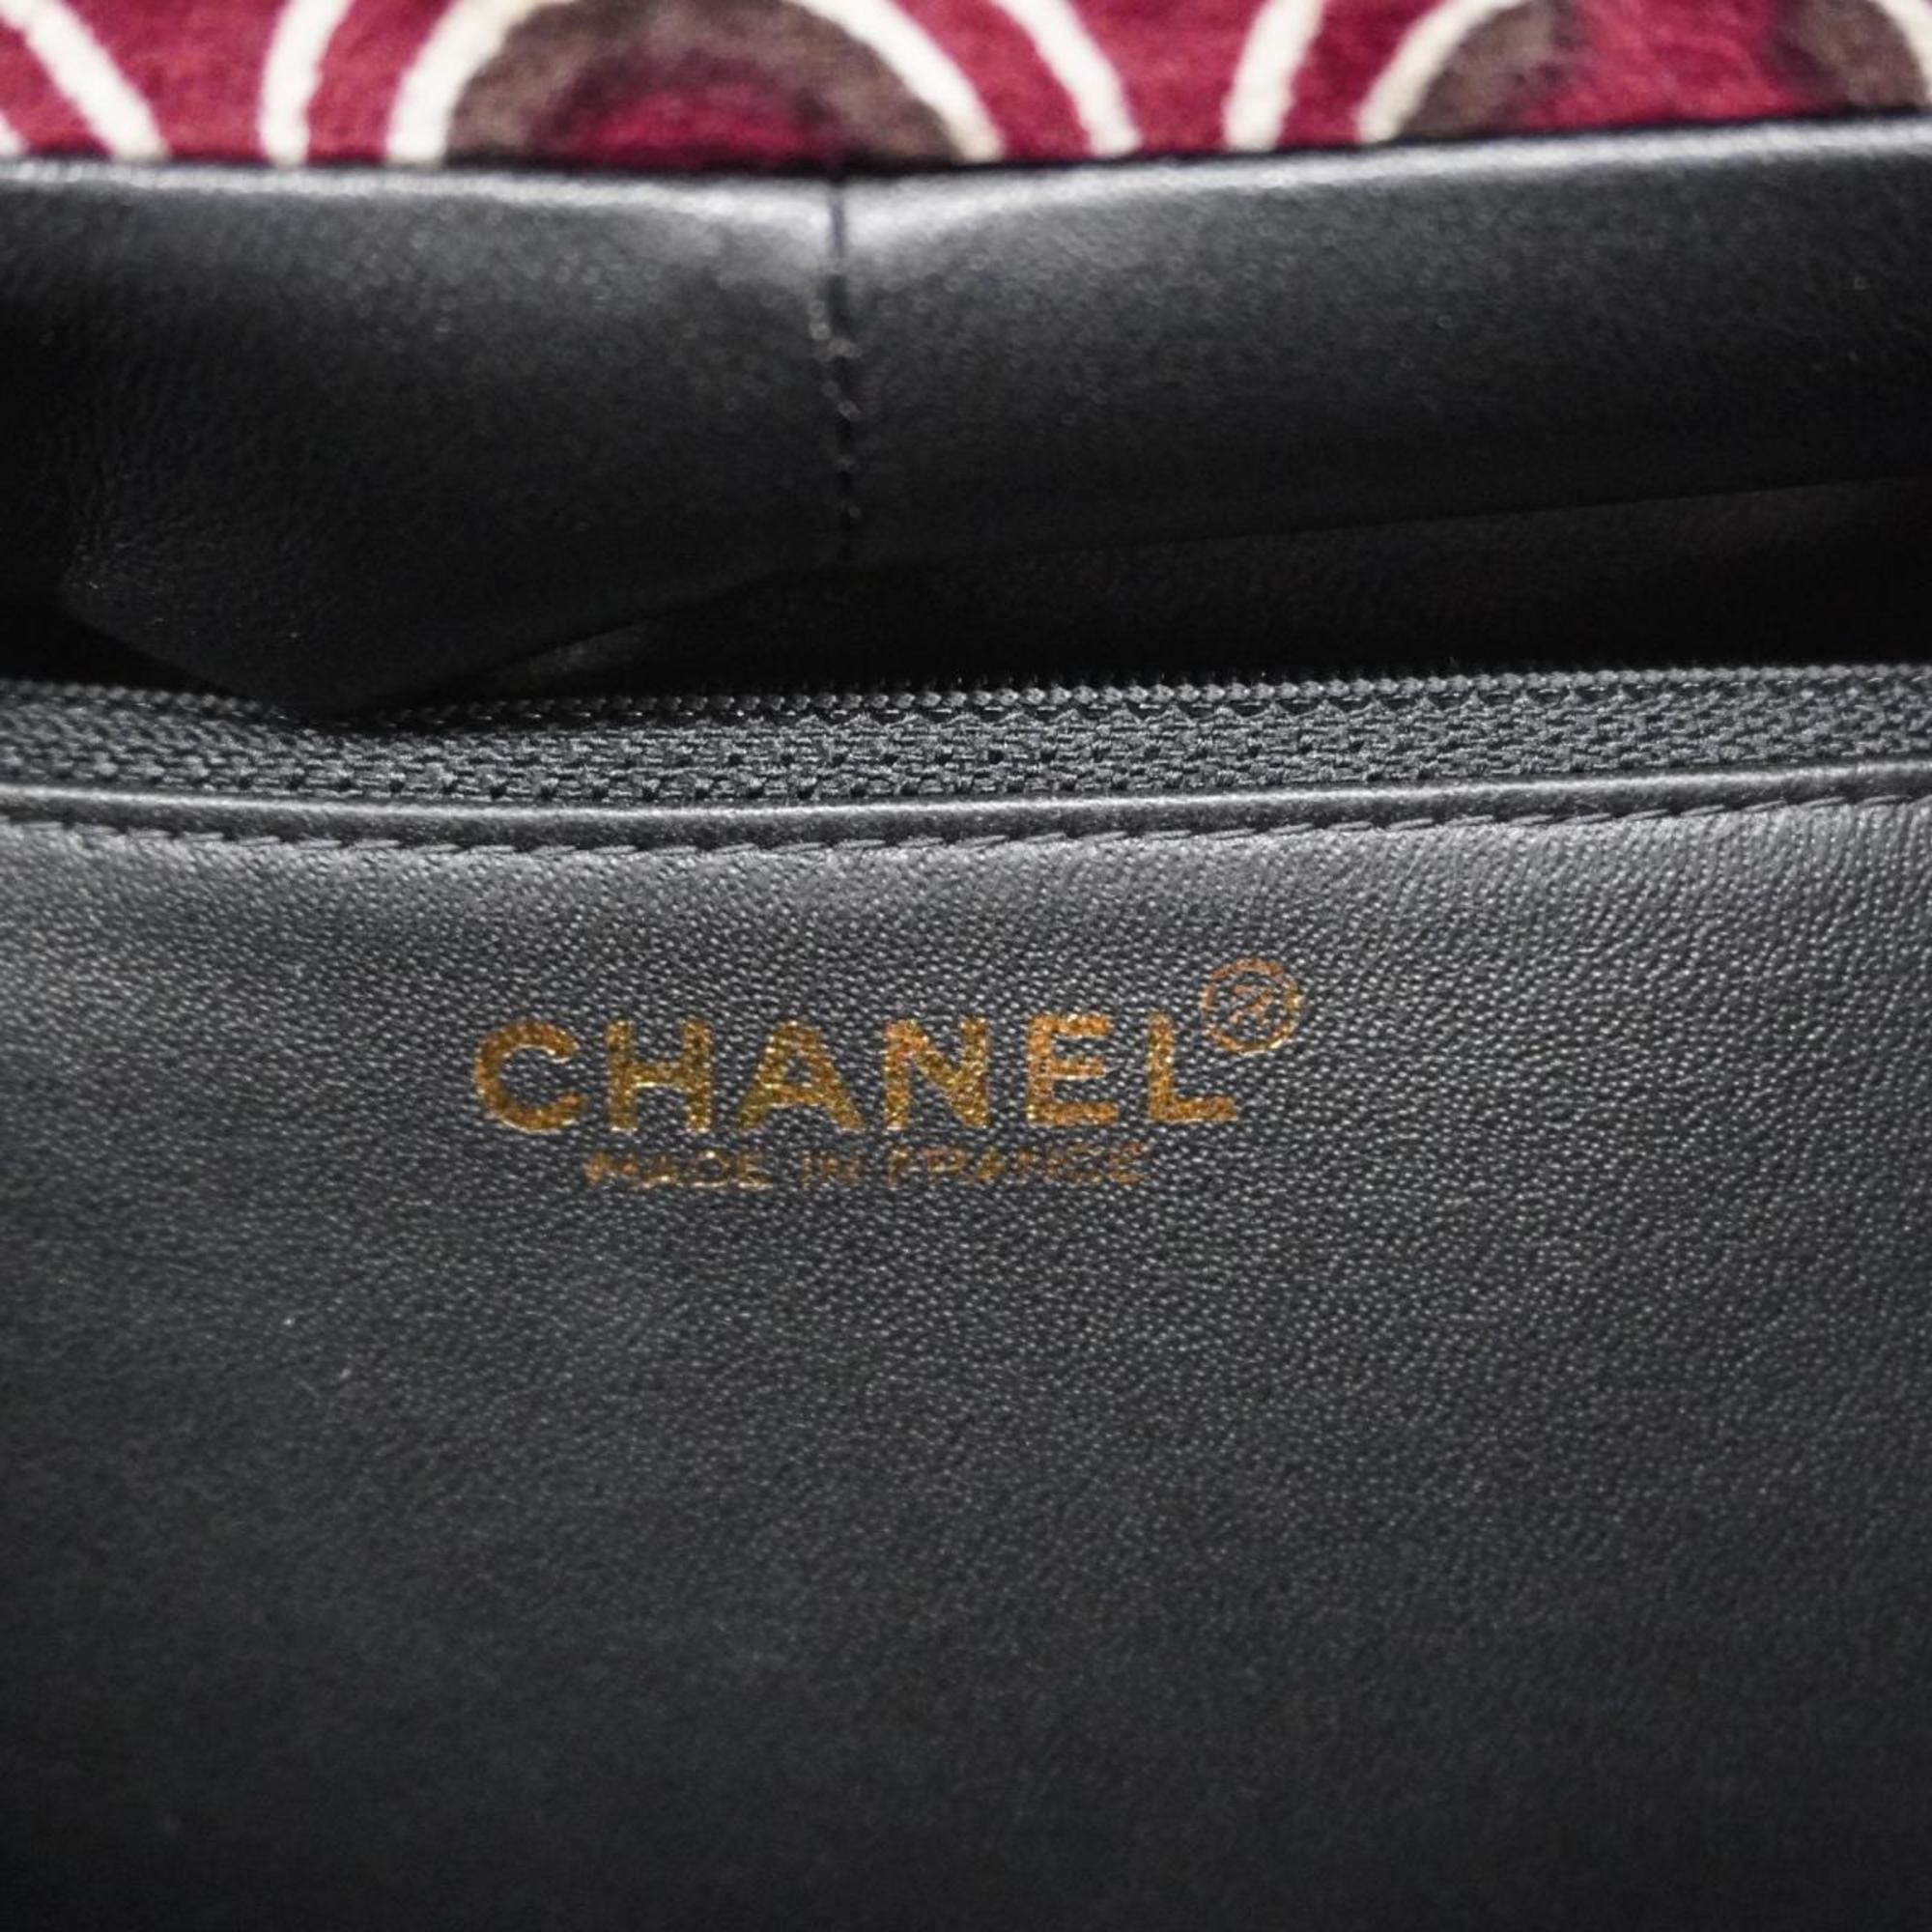 Chanel handbag velour red champagne ladies